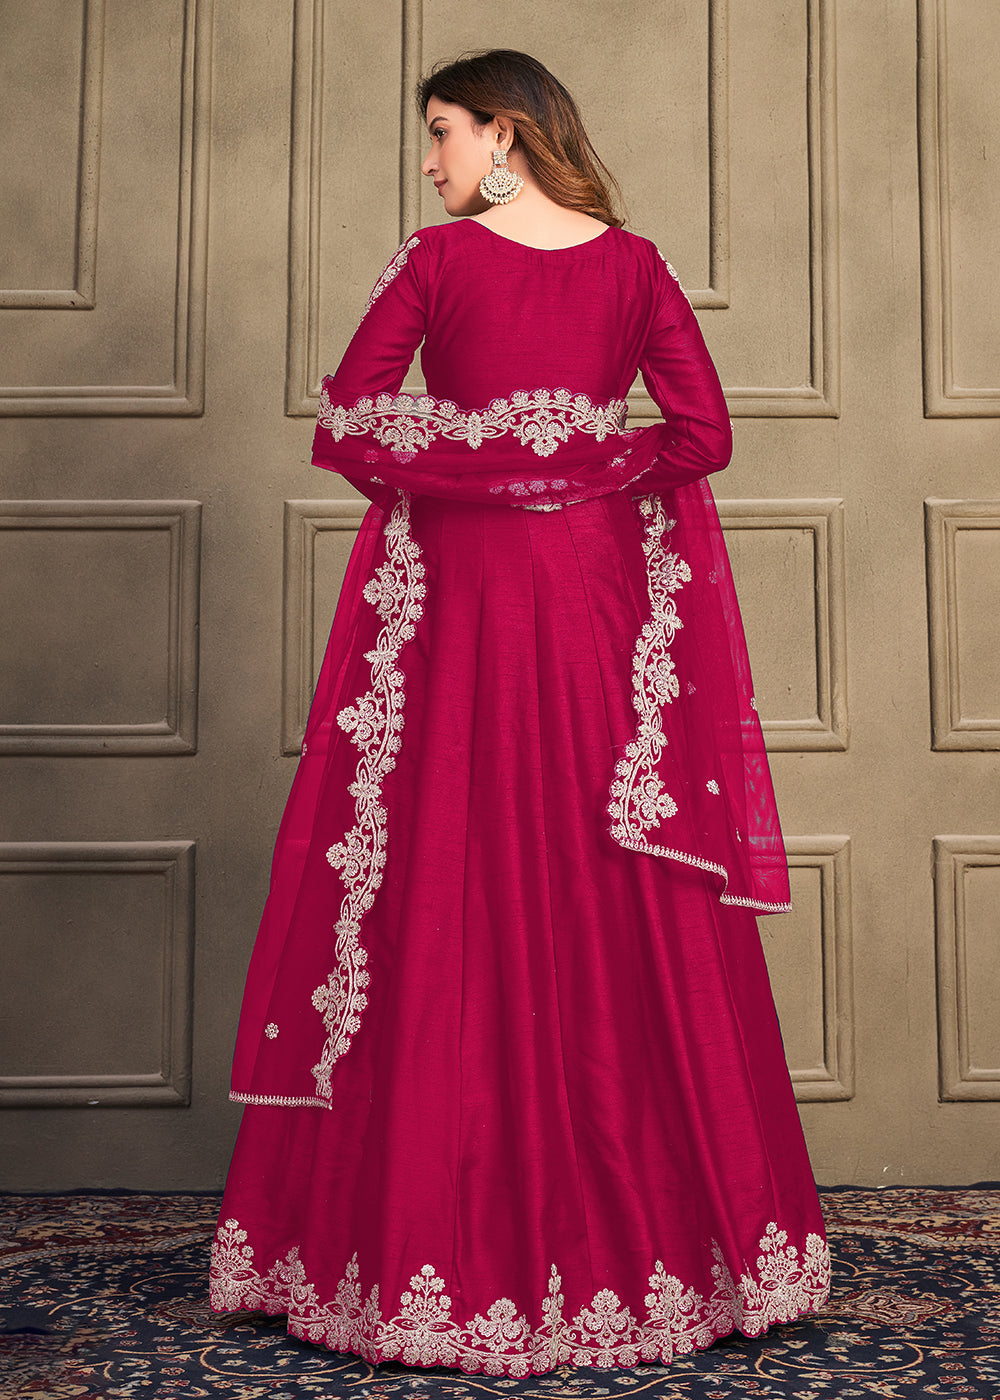 Buy Now Stylish Pinkish Red Art Silk Floor Length Anarkali Dress Online in USA, UK, Australia, New Zealand, Canada & Worldwide at Empress Clothing.